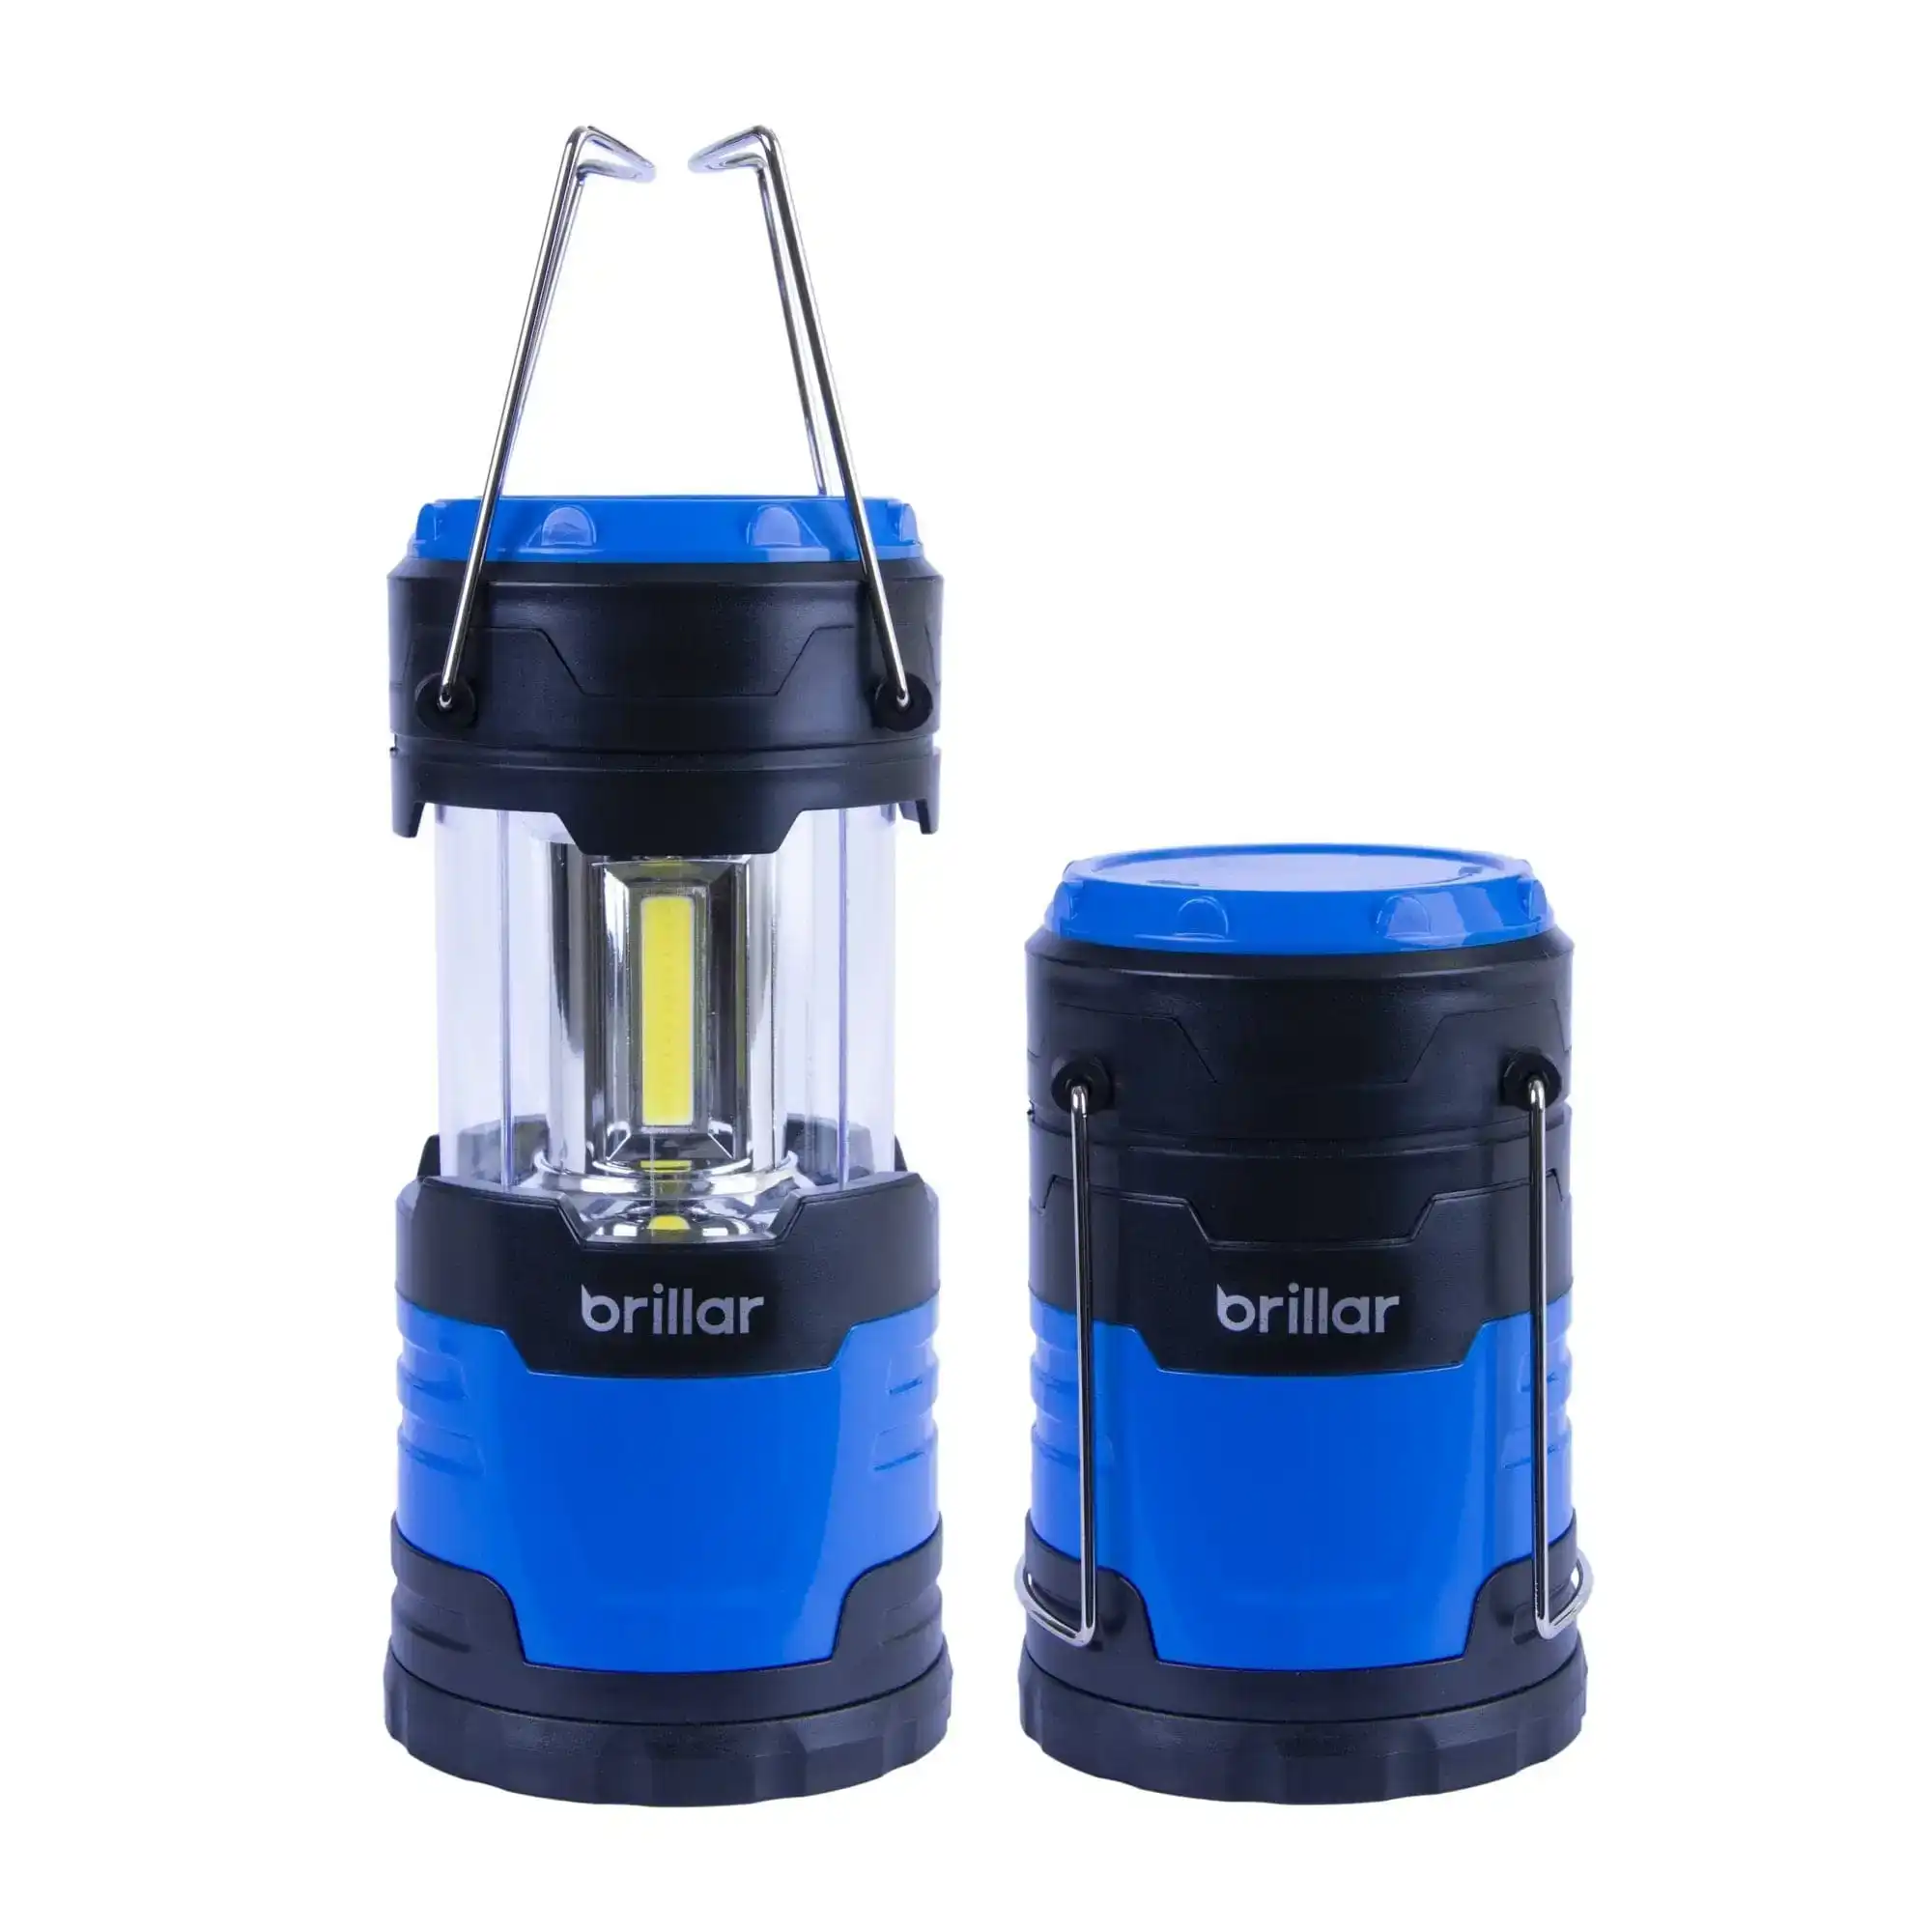 Brillar Jumbo Pop-up Lantern - Blue